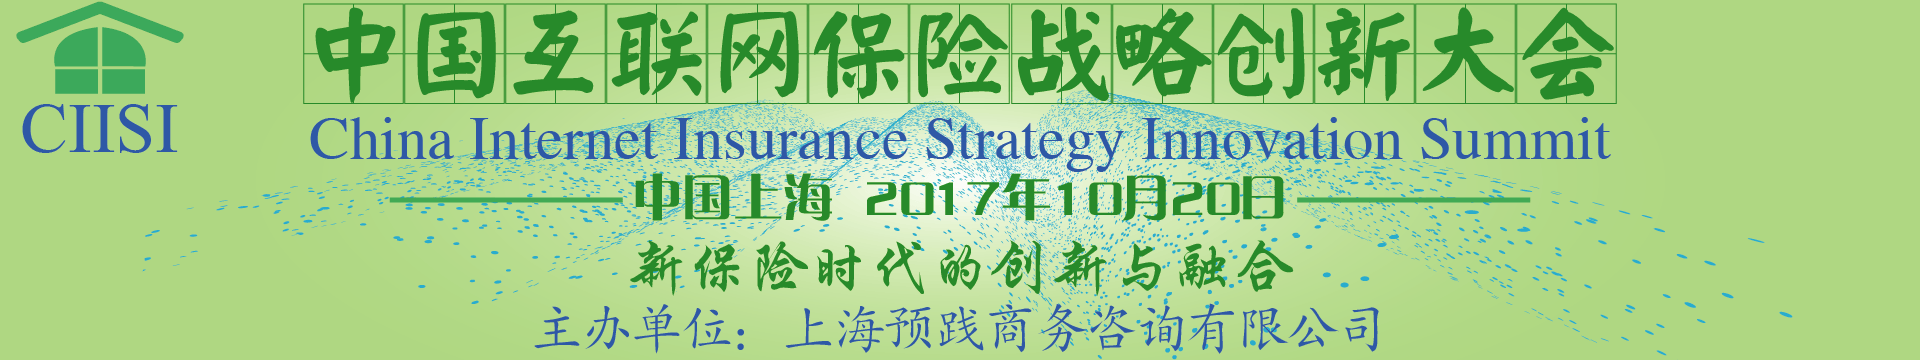 CIISI 2017中国互联网保险战略创新大会